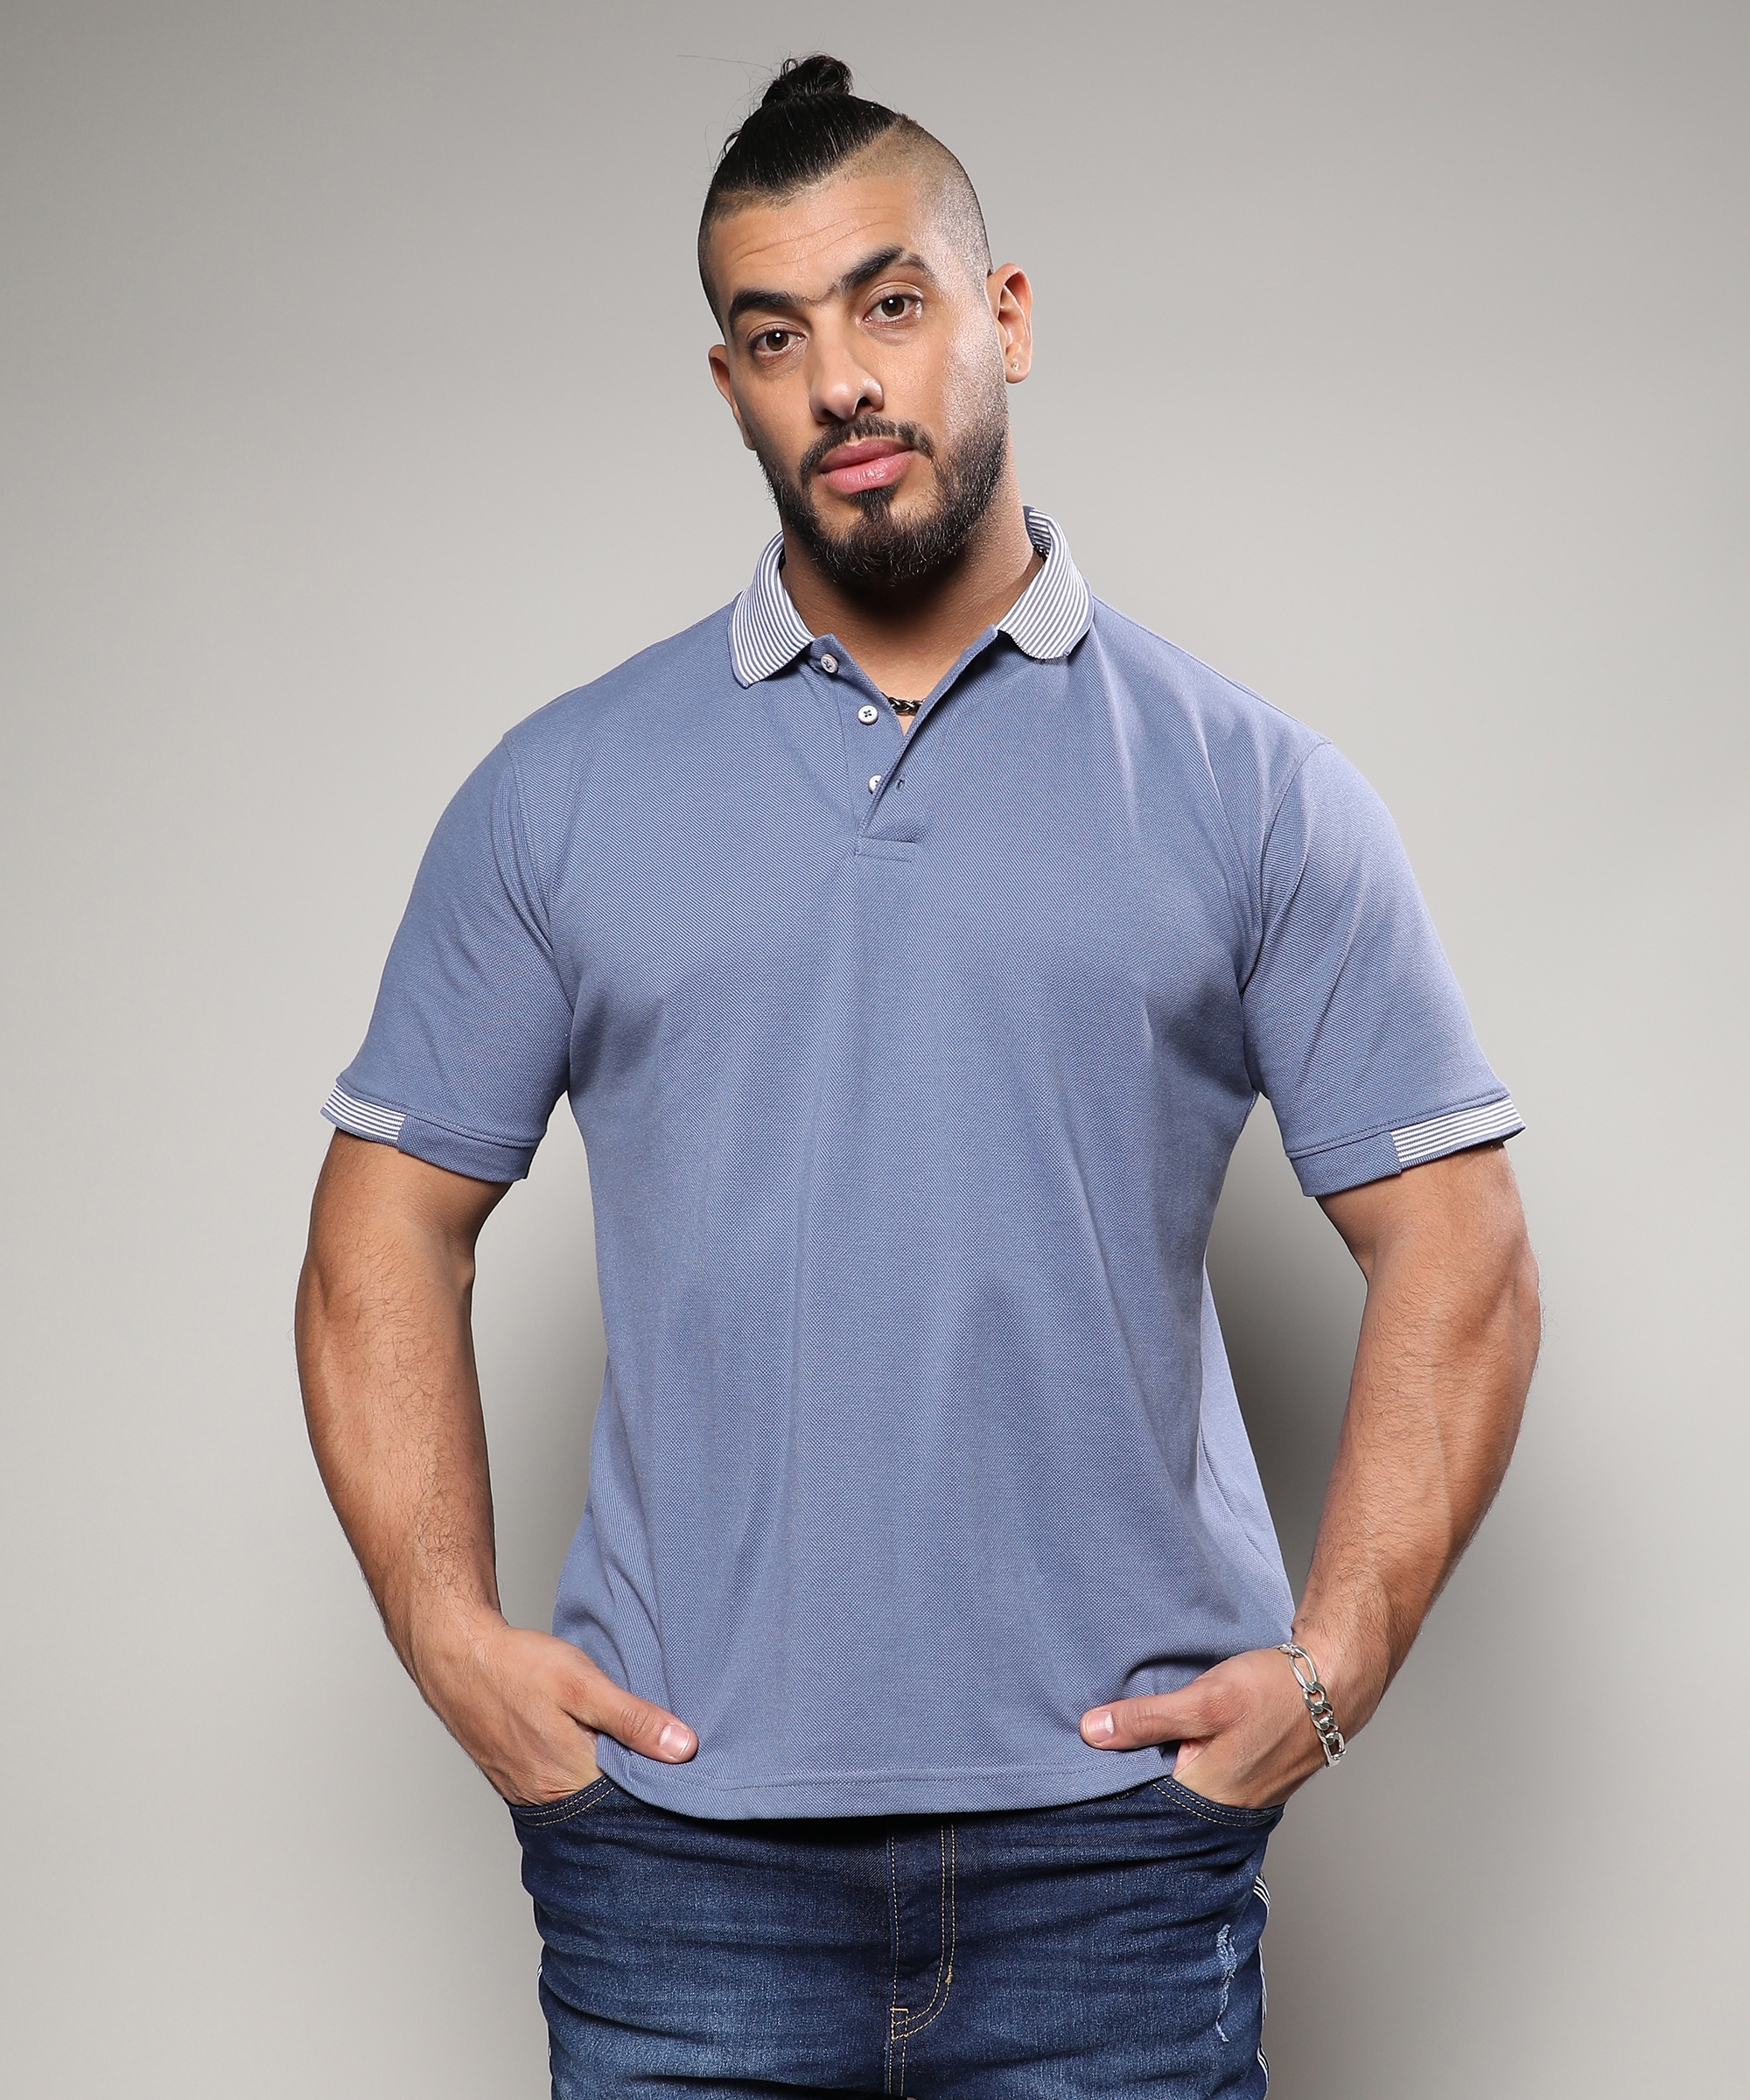 Instafab Plus | Men's Egyptian Blue Basic Polo T-Shirt